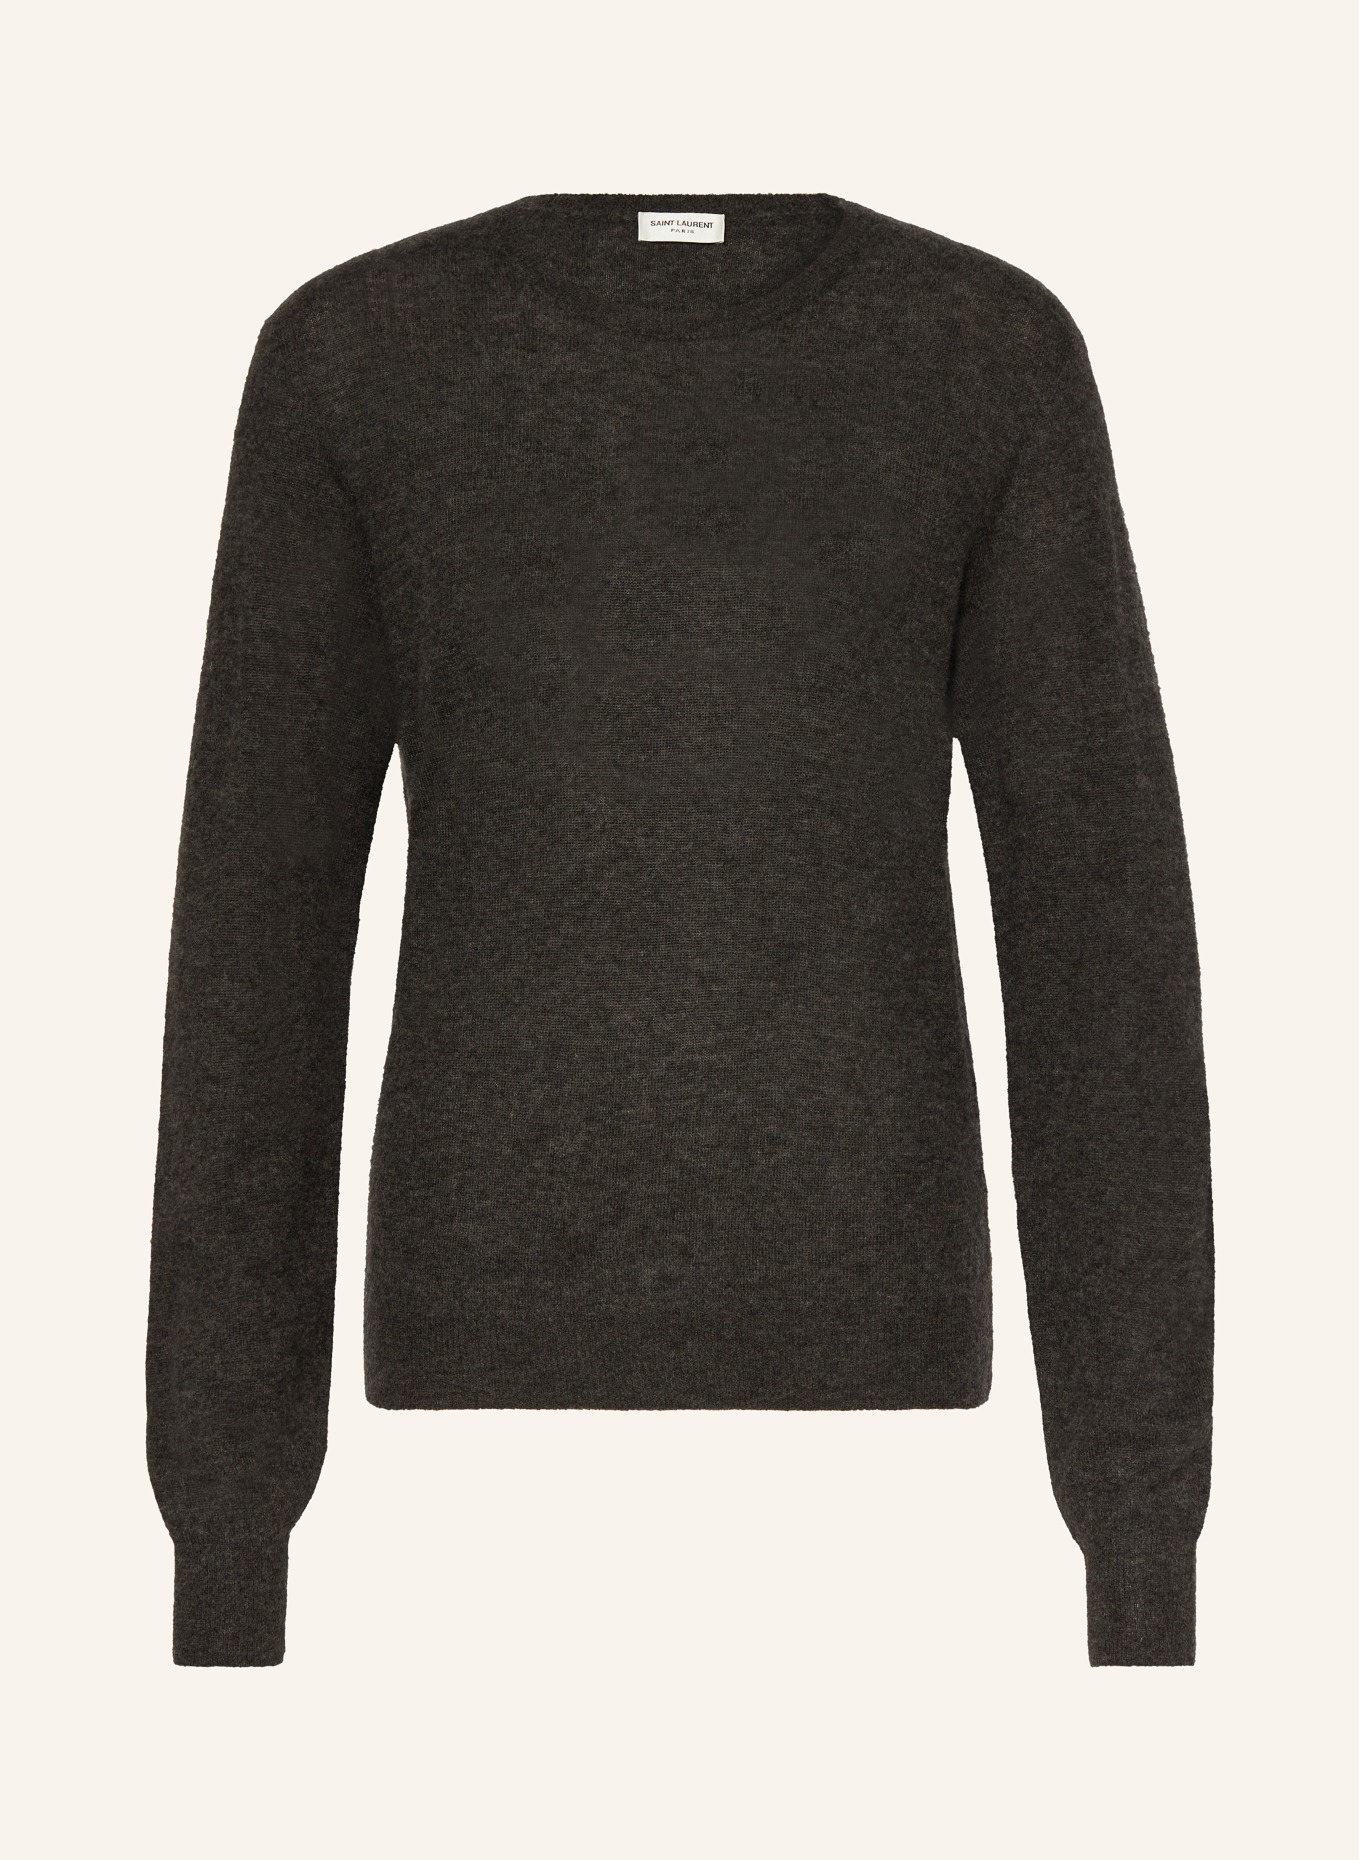 SAINT LAURENT Pullover mit Cashmere, Farbe: DUNKELGRAU (Bild 1)